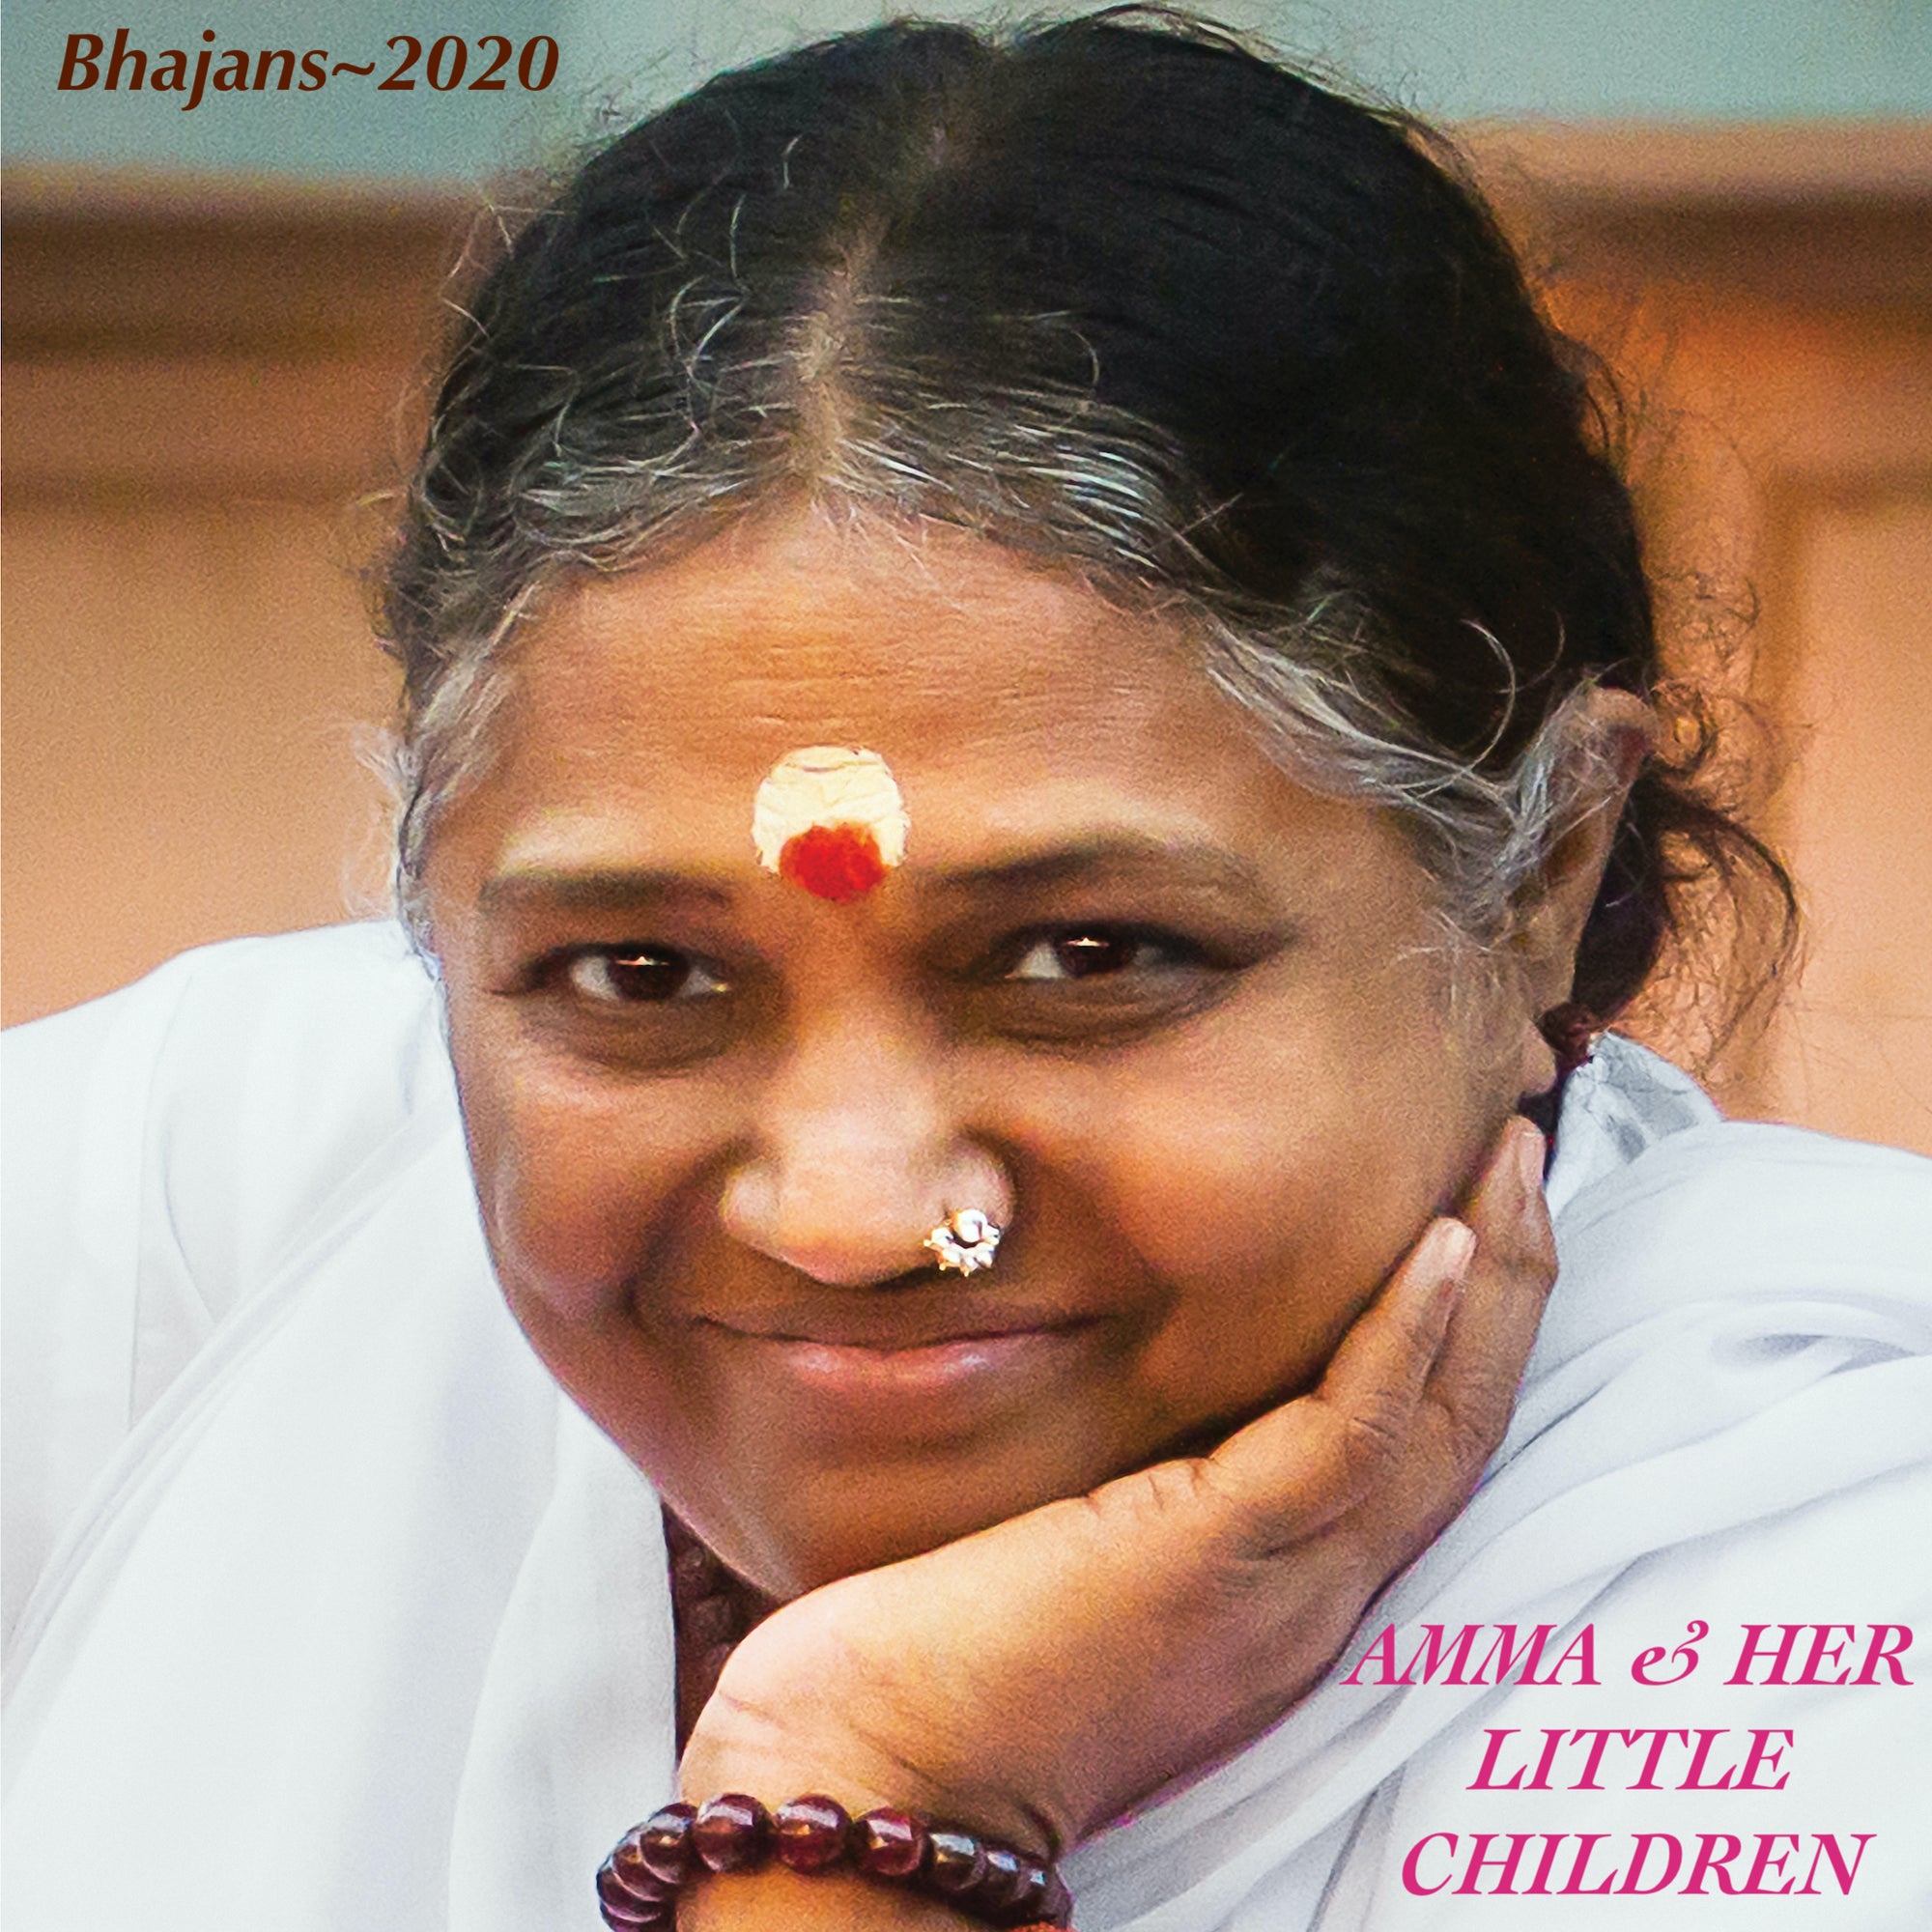 Amma & Her Little Children - Bhajans 2020 (Digital)